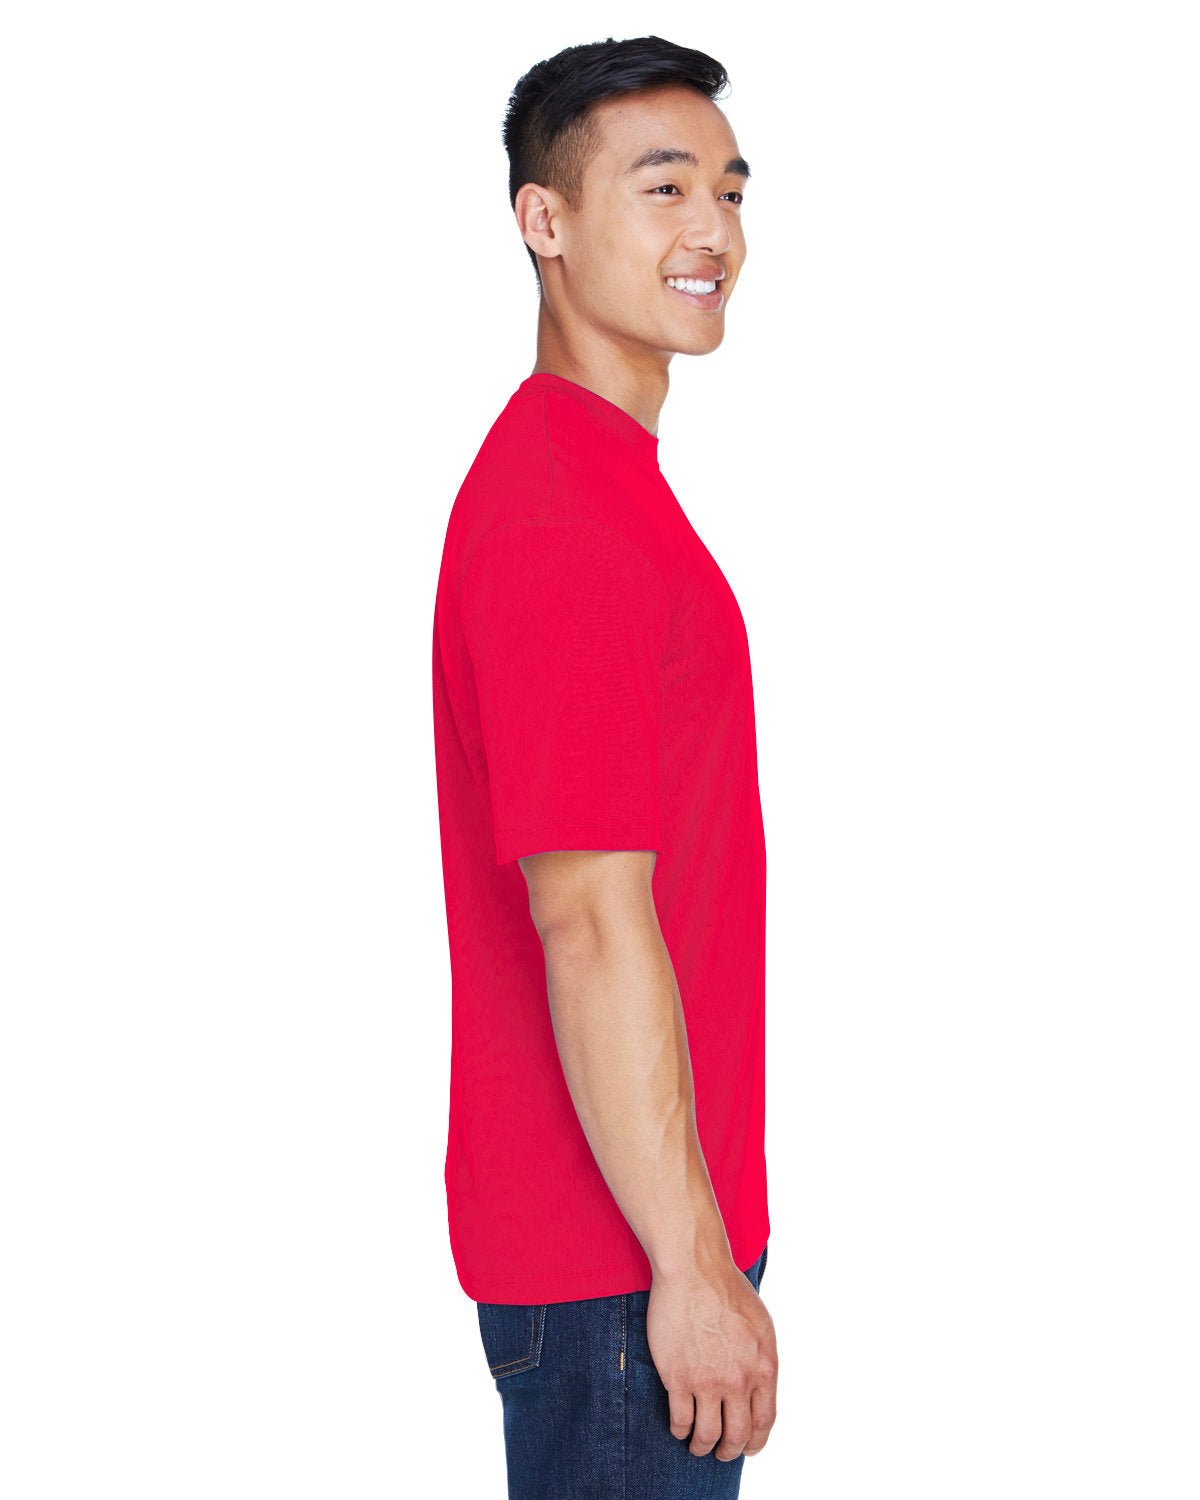 8400-UltraClub-RED-UltraClub-T-Shirts-3